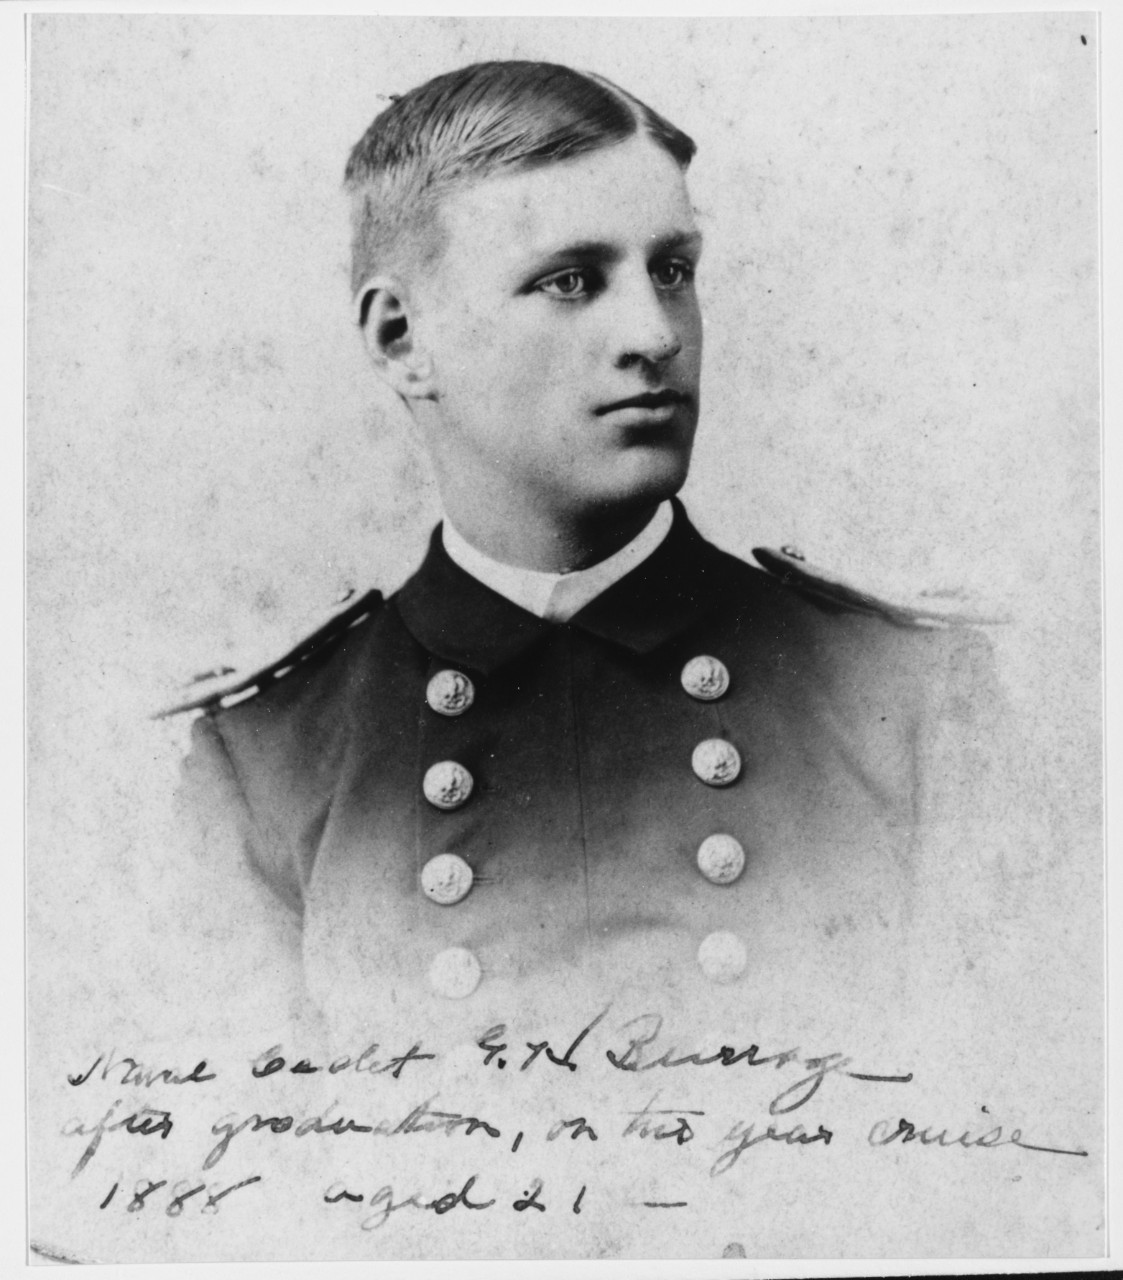 Naval Cadet Guy H. Burrage photographed 1888, Barcelona, Spain, while serving in USS LANCASTER.